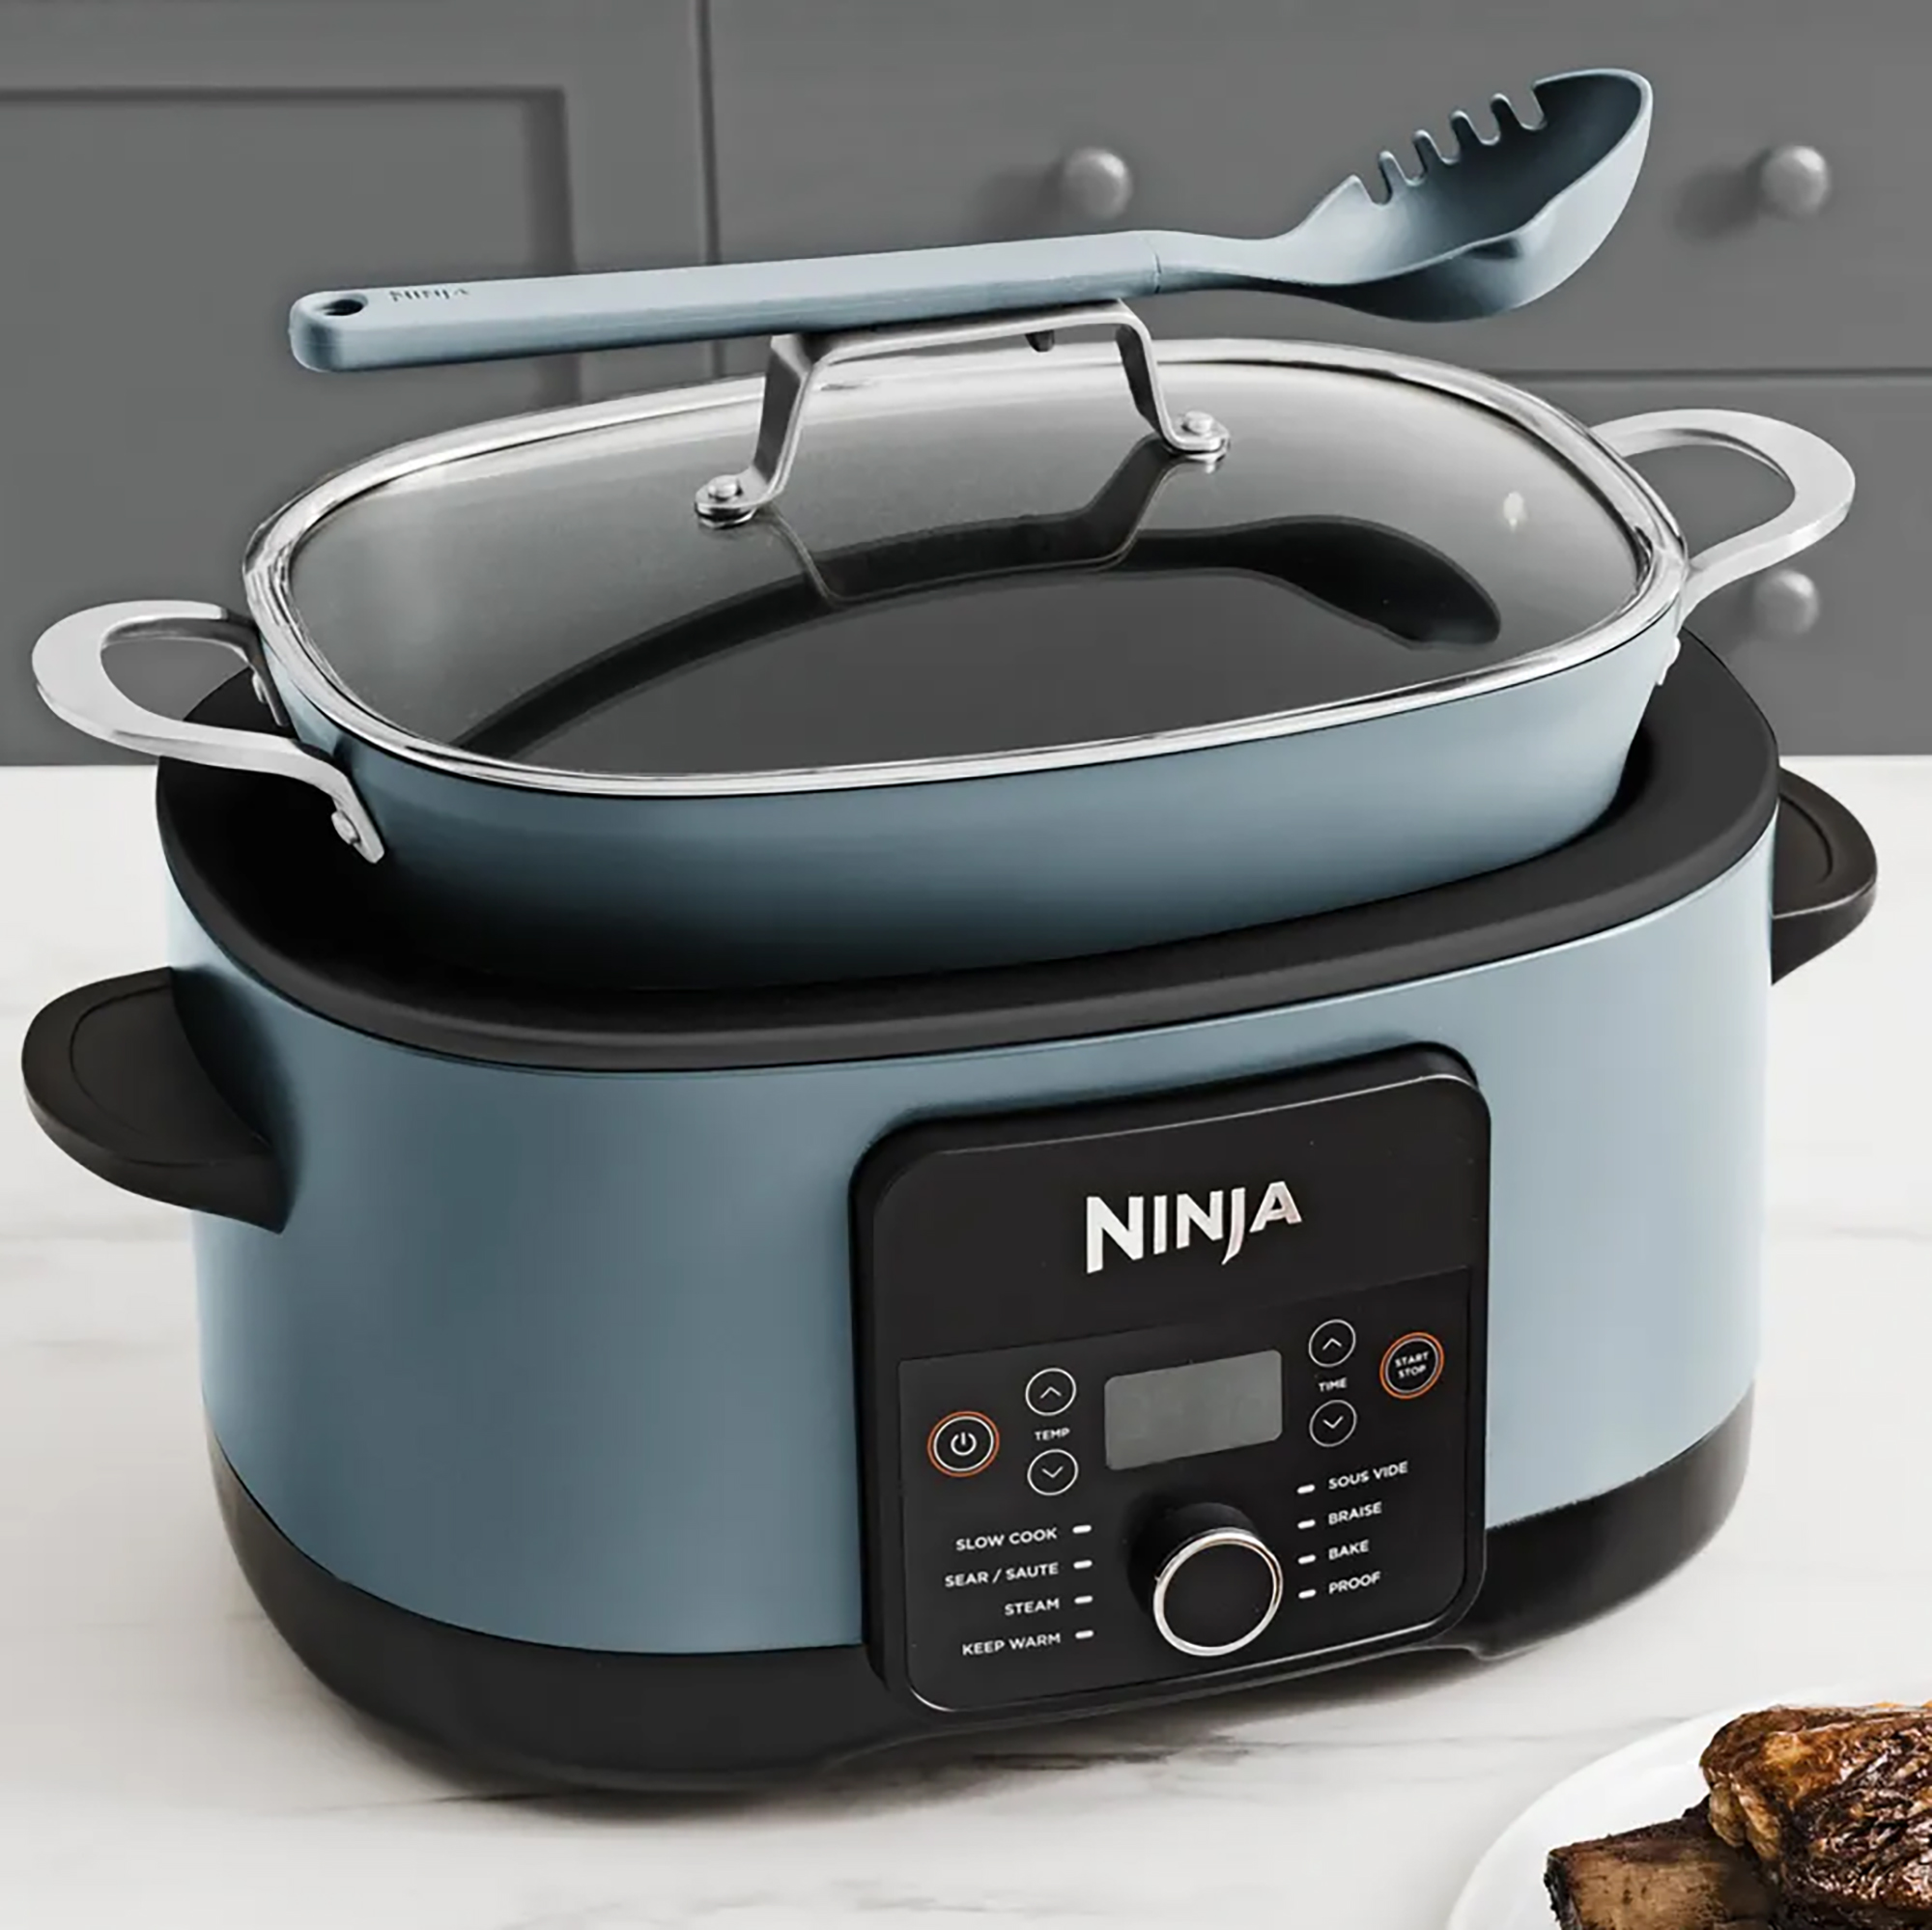 Ninja Crockpot - Ninja Slow Cooker Review 2023